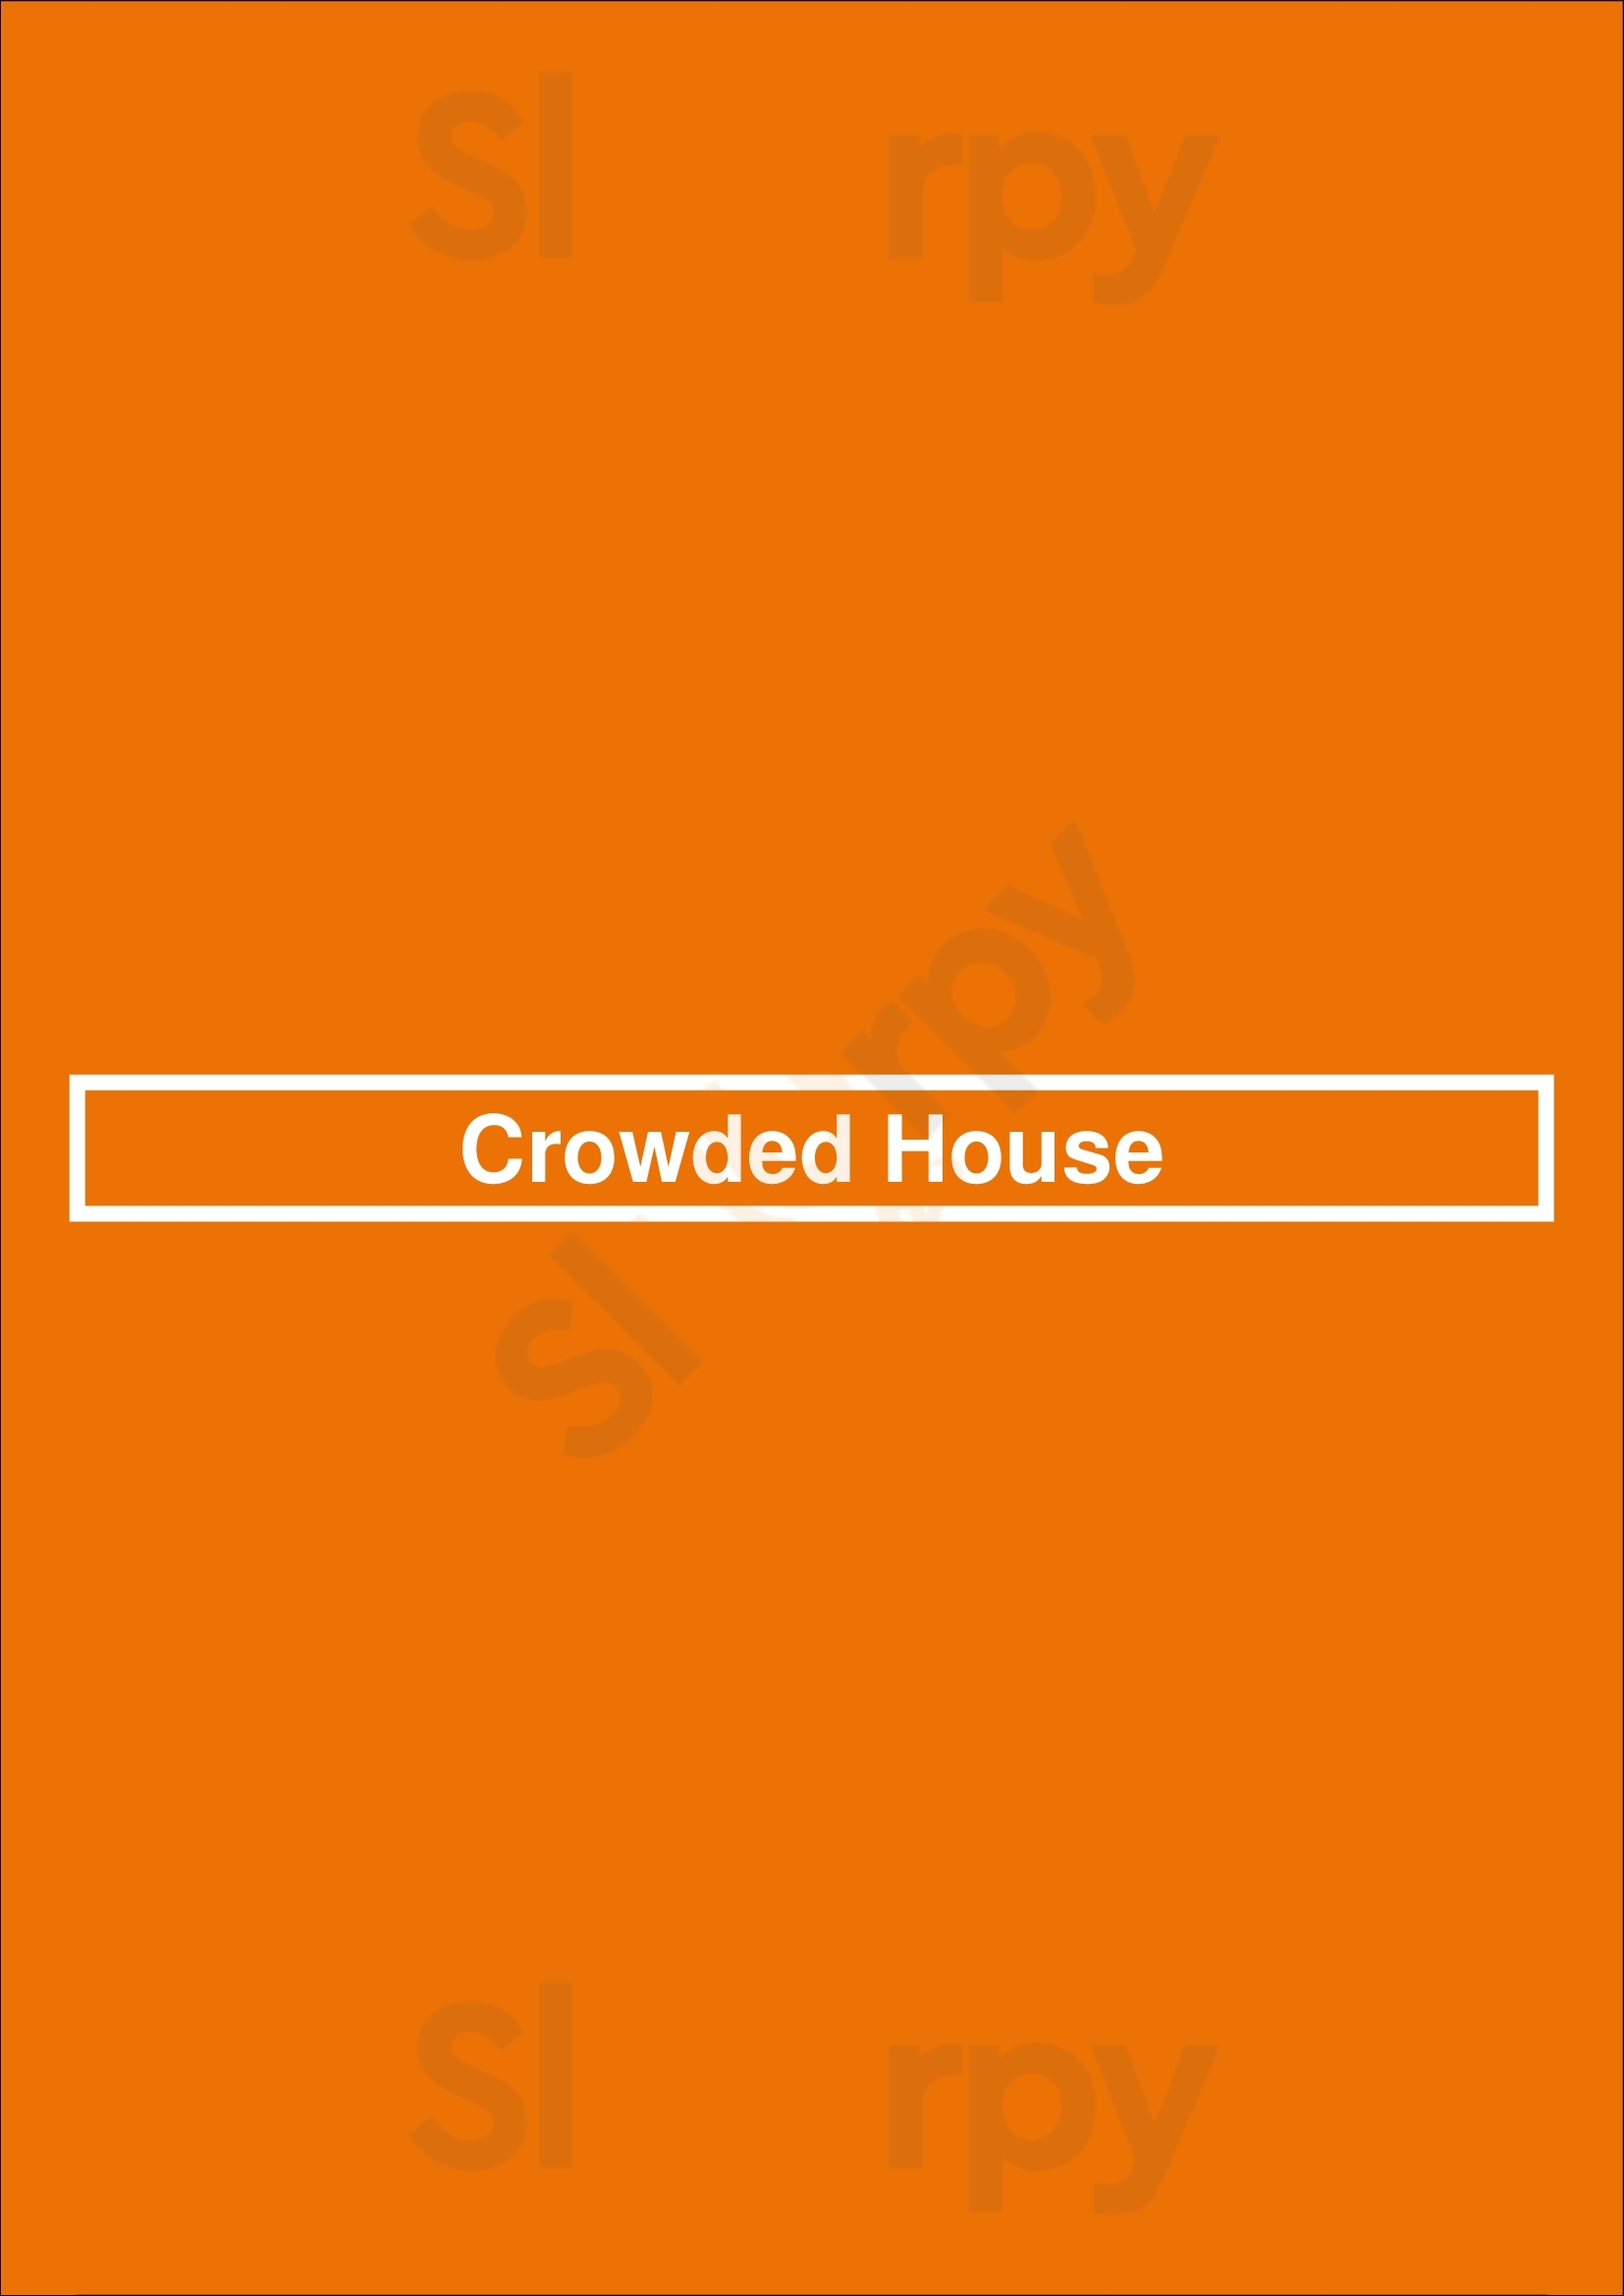 Crowded House Toronto Menu - 1